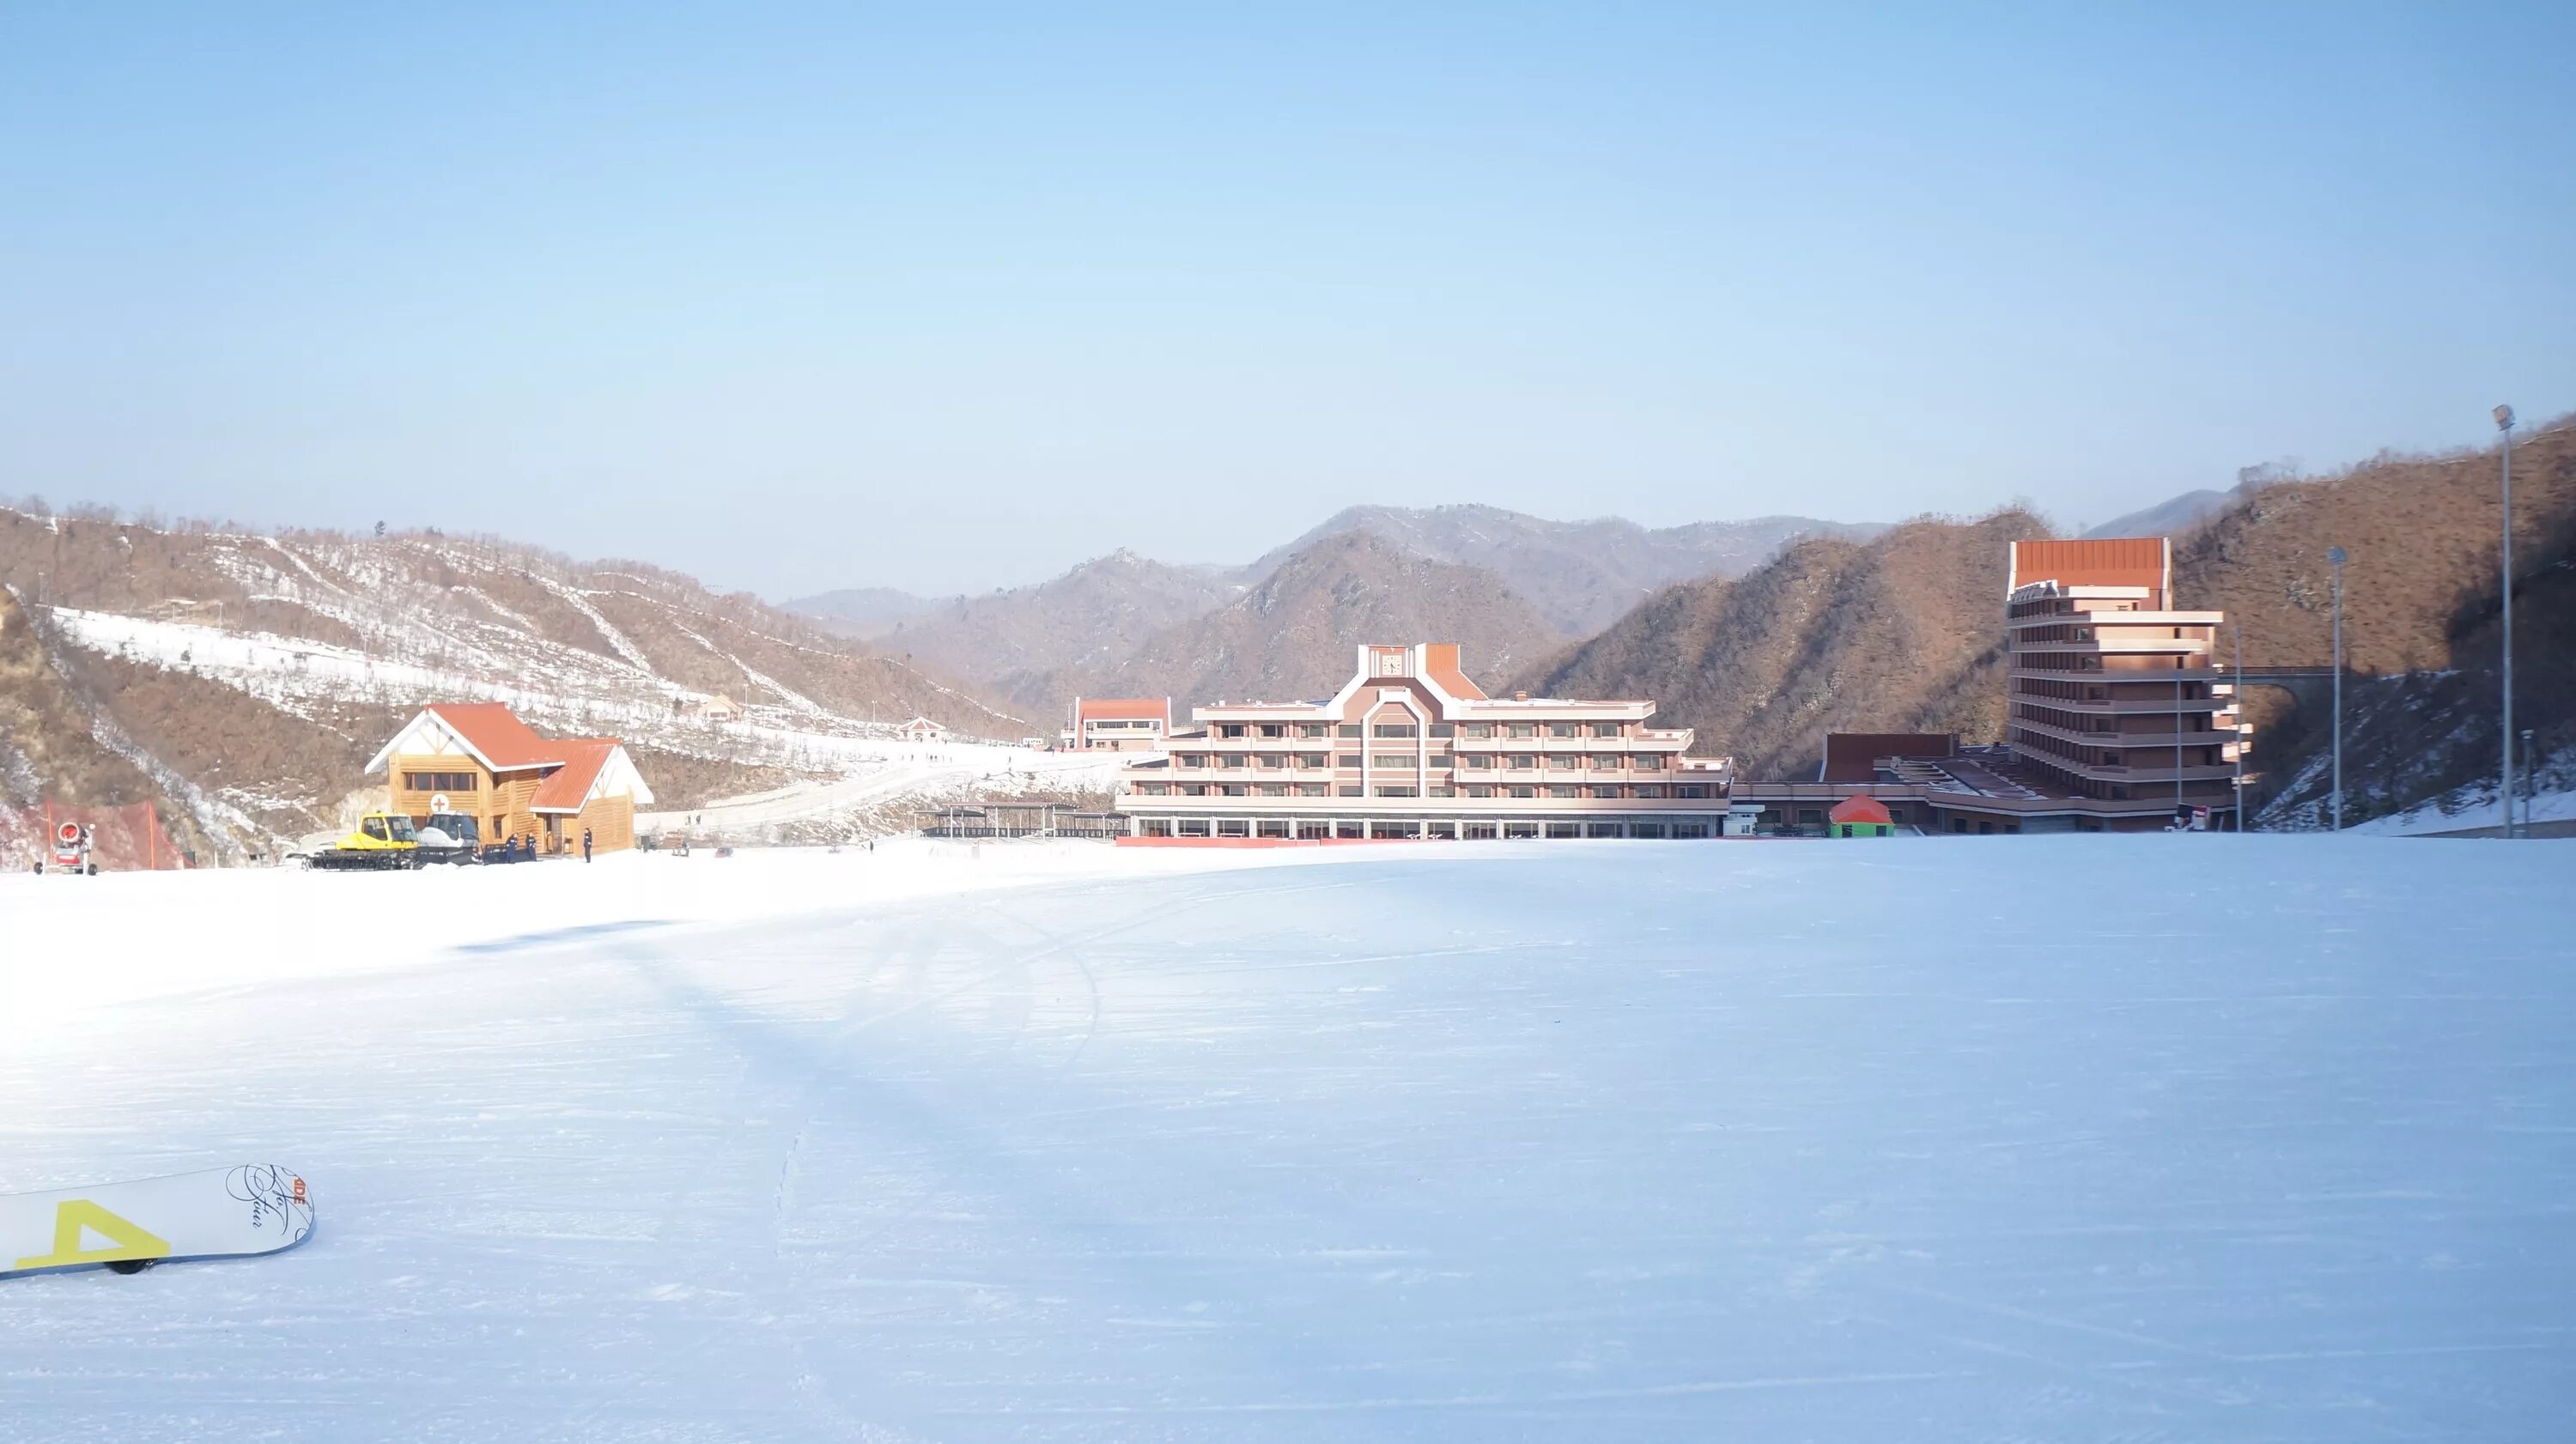 Северная корея горнолыжный курорт. Горнолыжный курорт Масик КНДР. North Korea Ski Resort. Масикрен горнолыжный курорт в Северной Корее. Горные лыжи в Северной Корее.